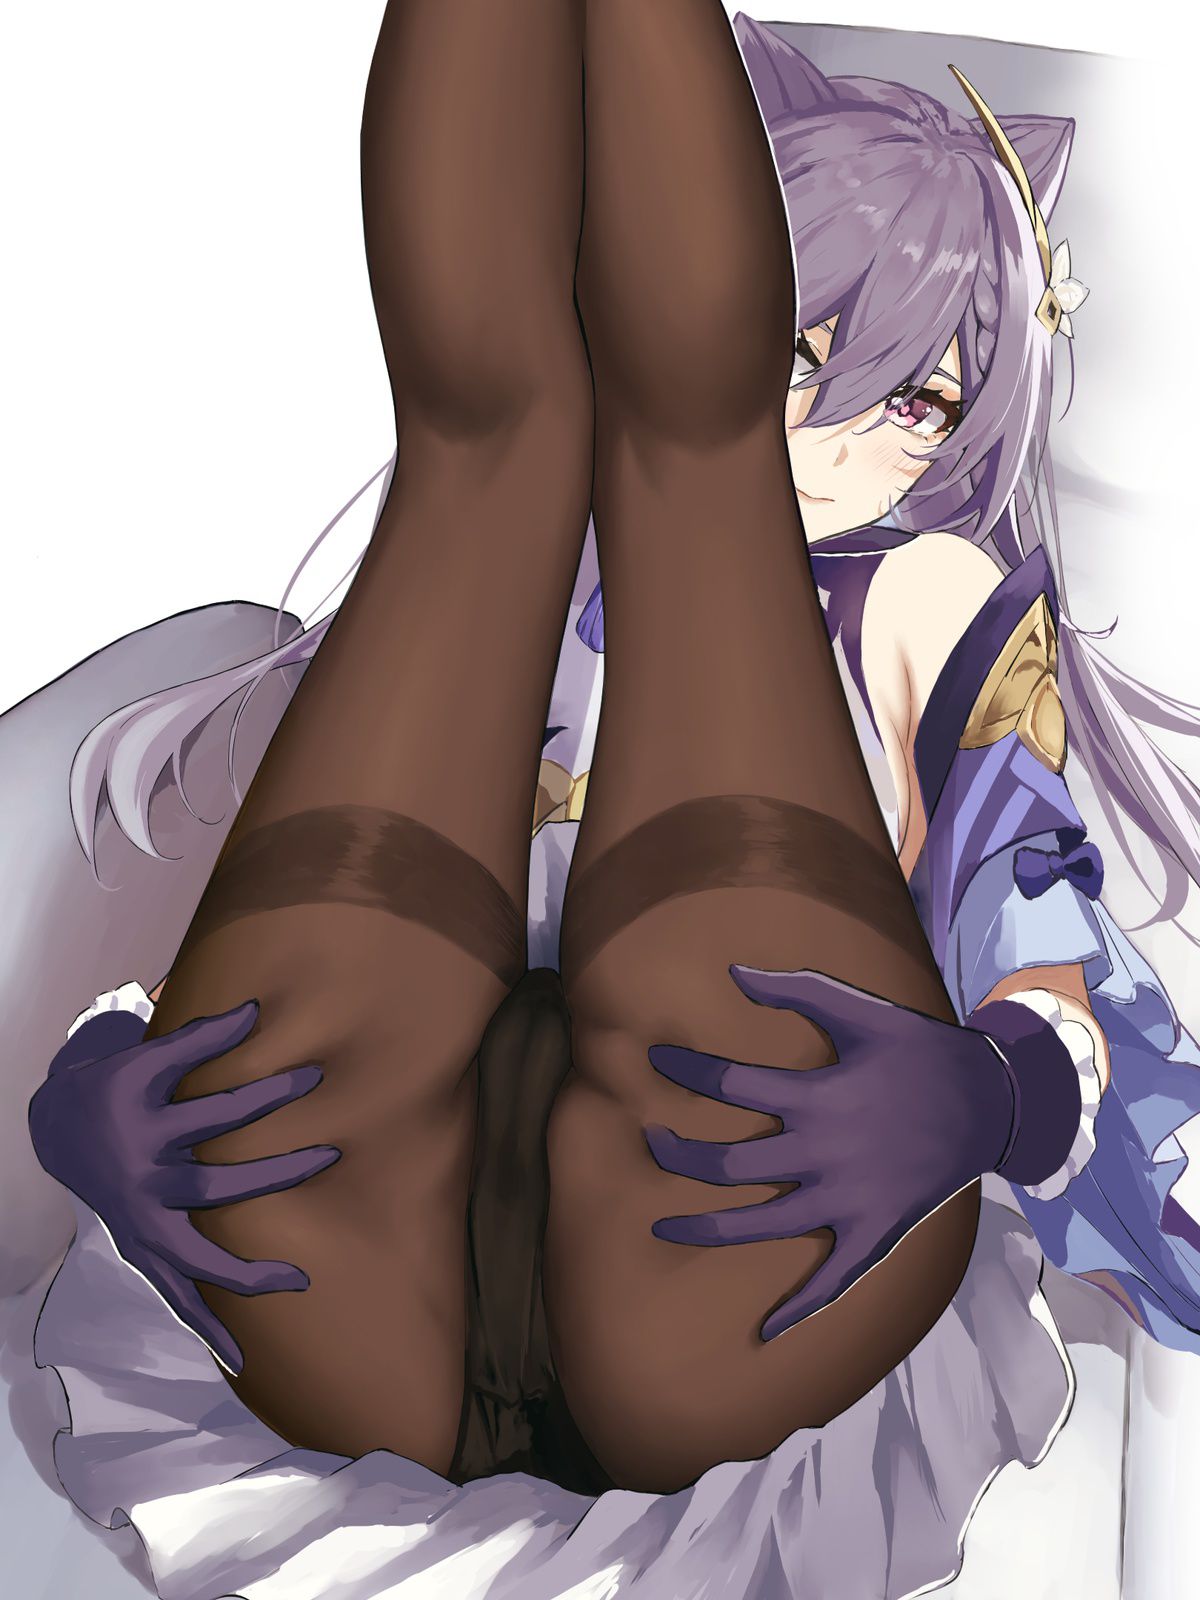 [Haragami] black stockings is erotic Tokiharu-chan's image! Part 2 37